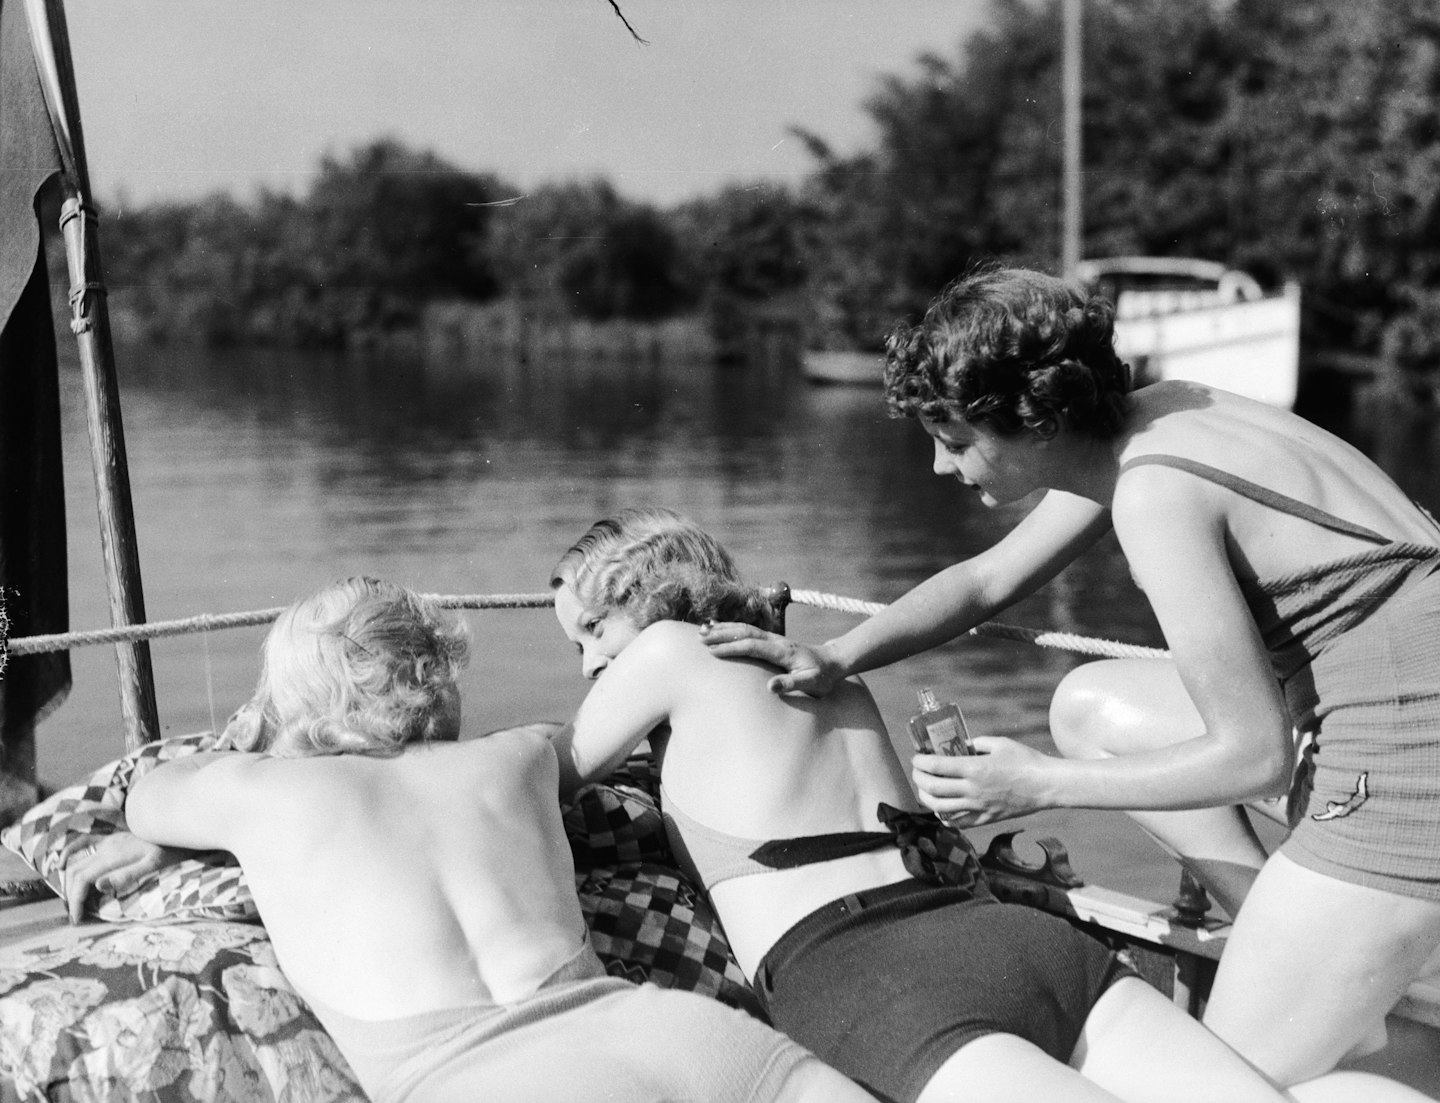 Women applying sunscreen